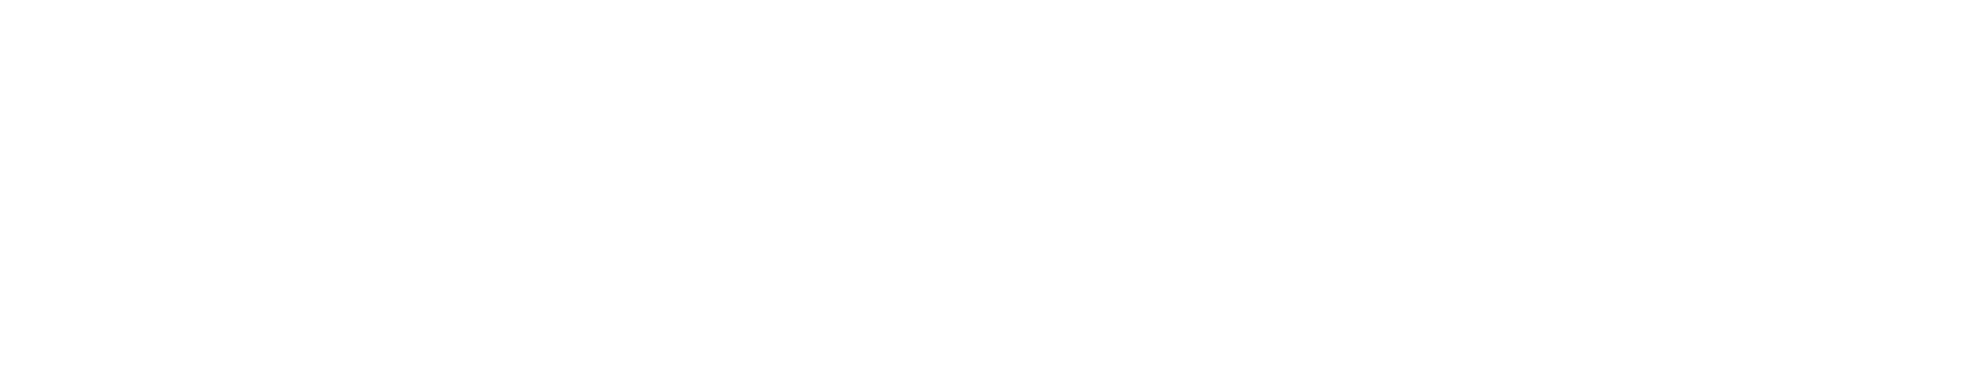 Board of Advisors